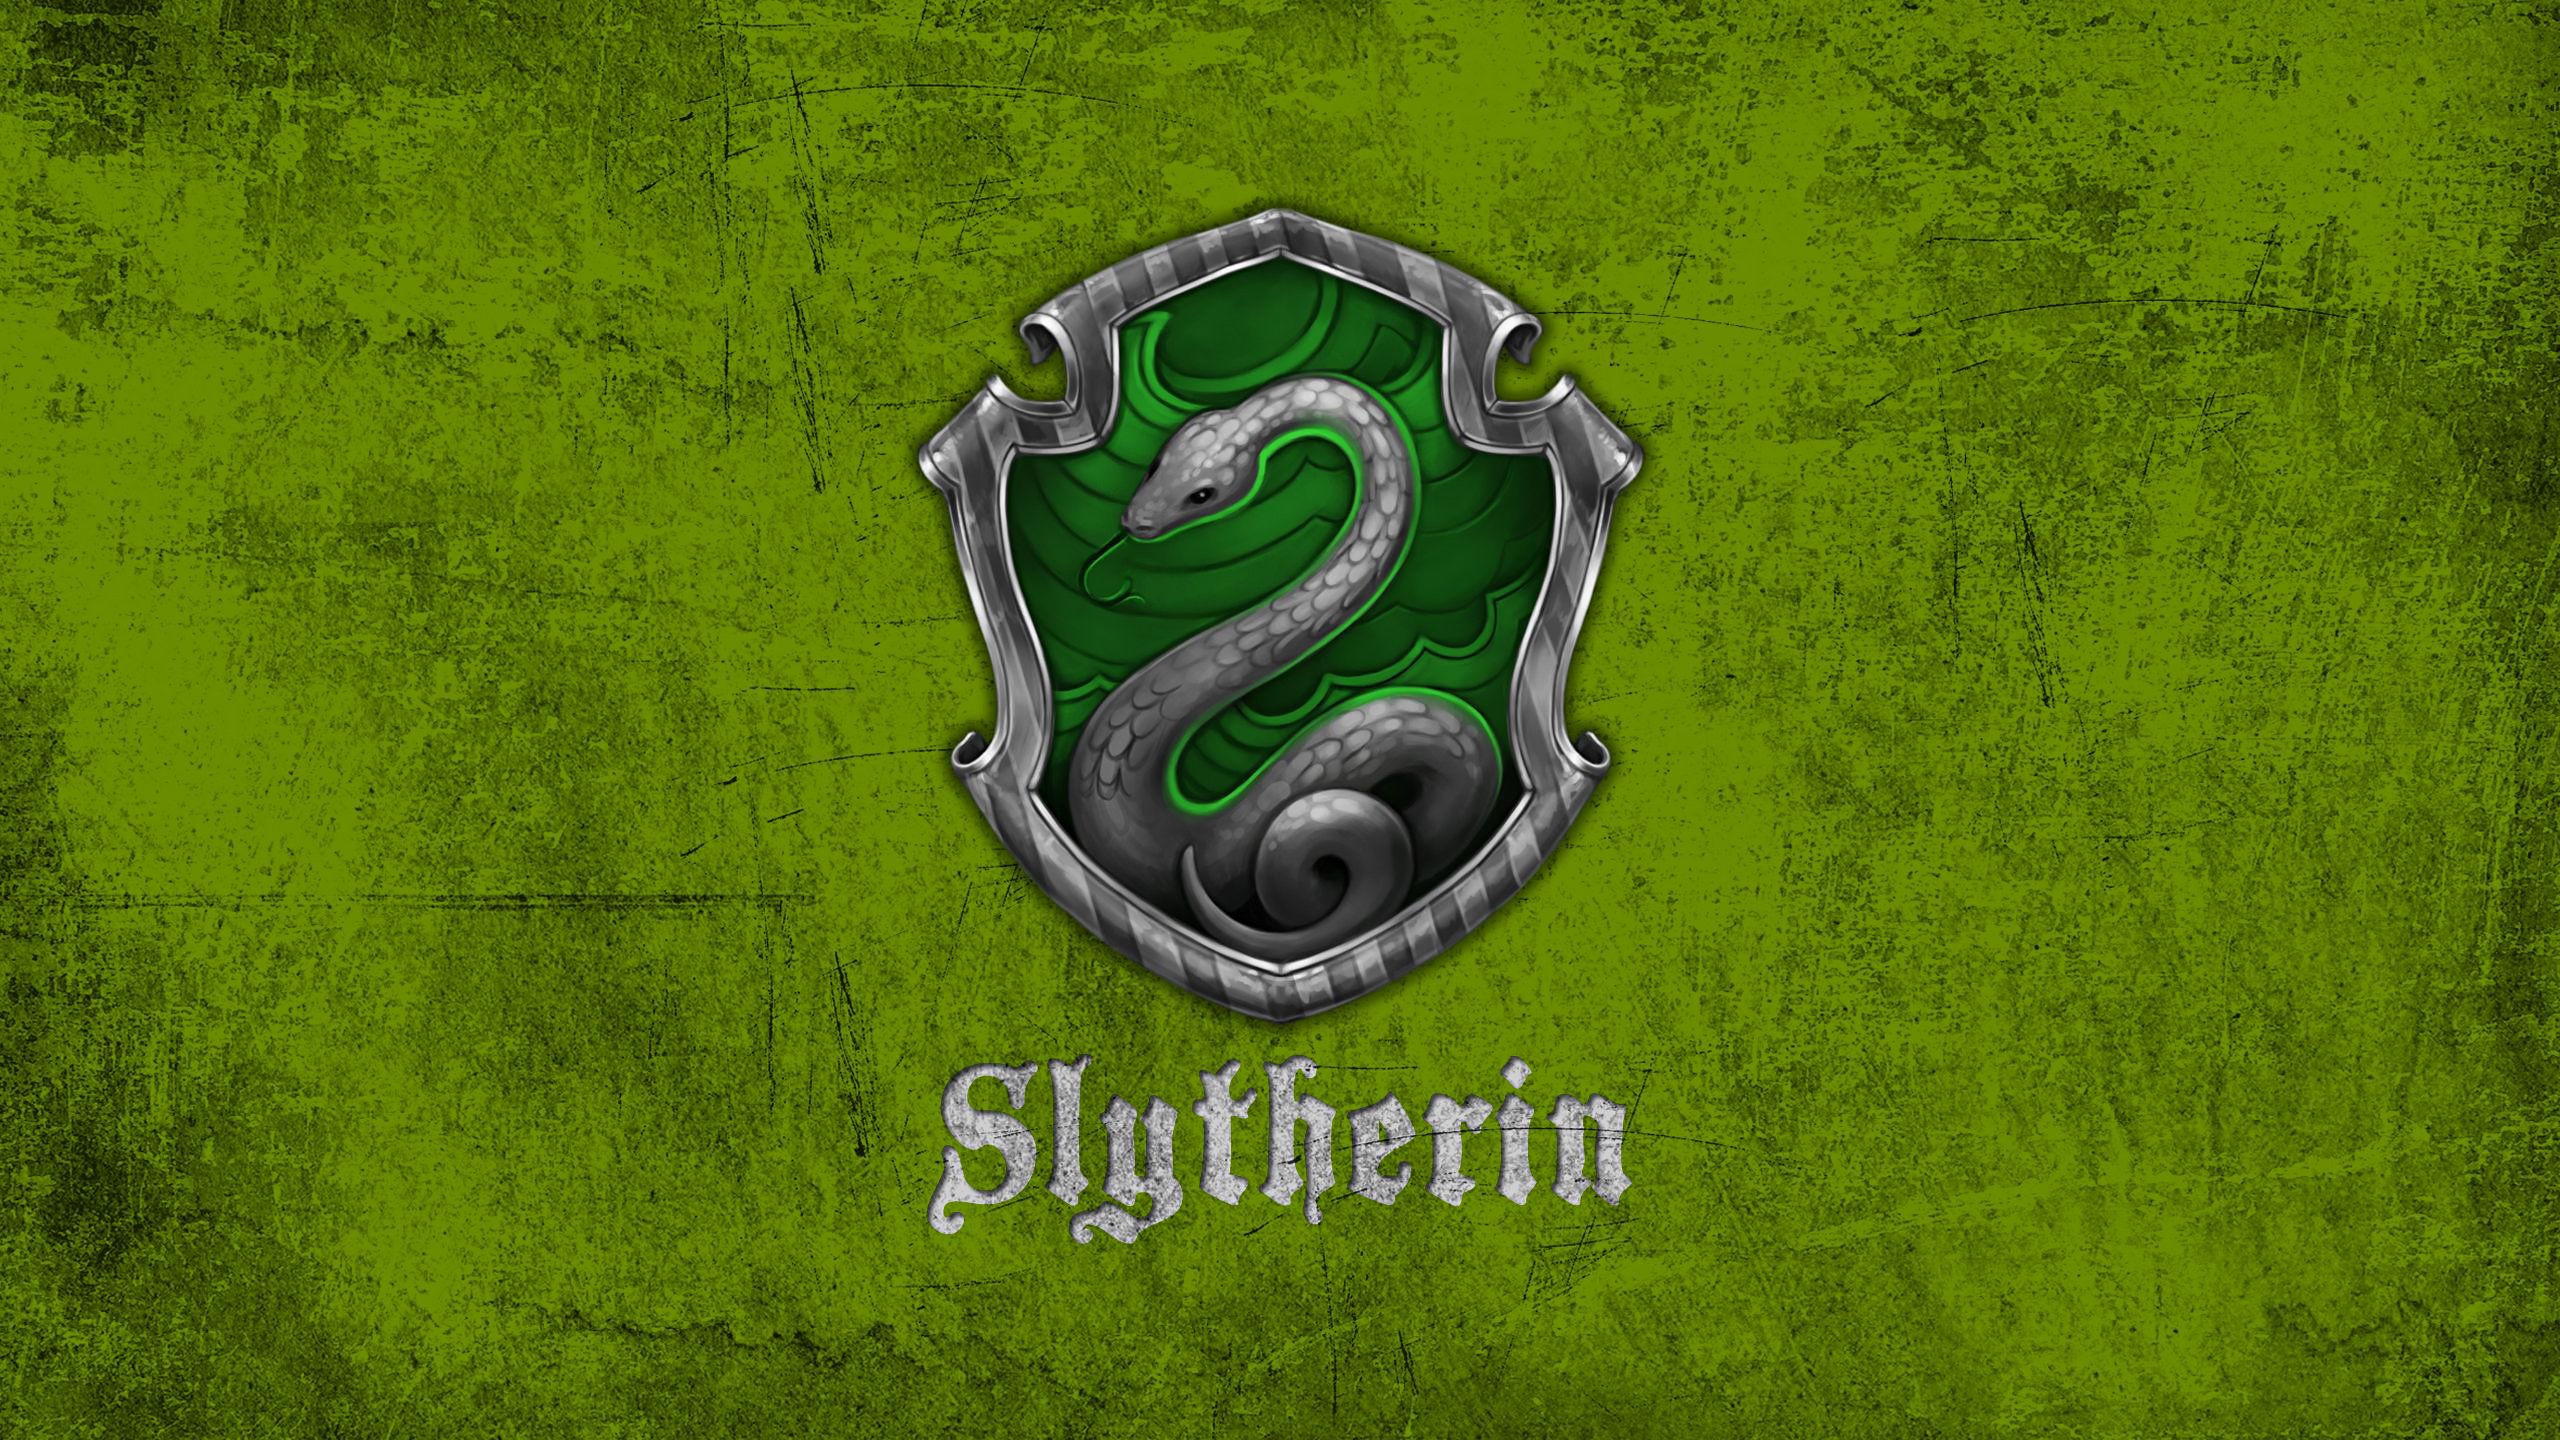 Fondos de pantalla Insignia Slytherin de Harry Potter